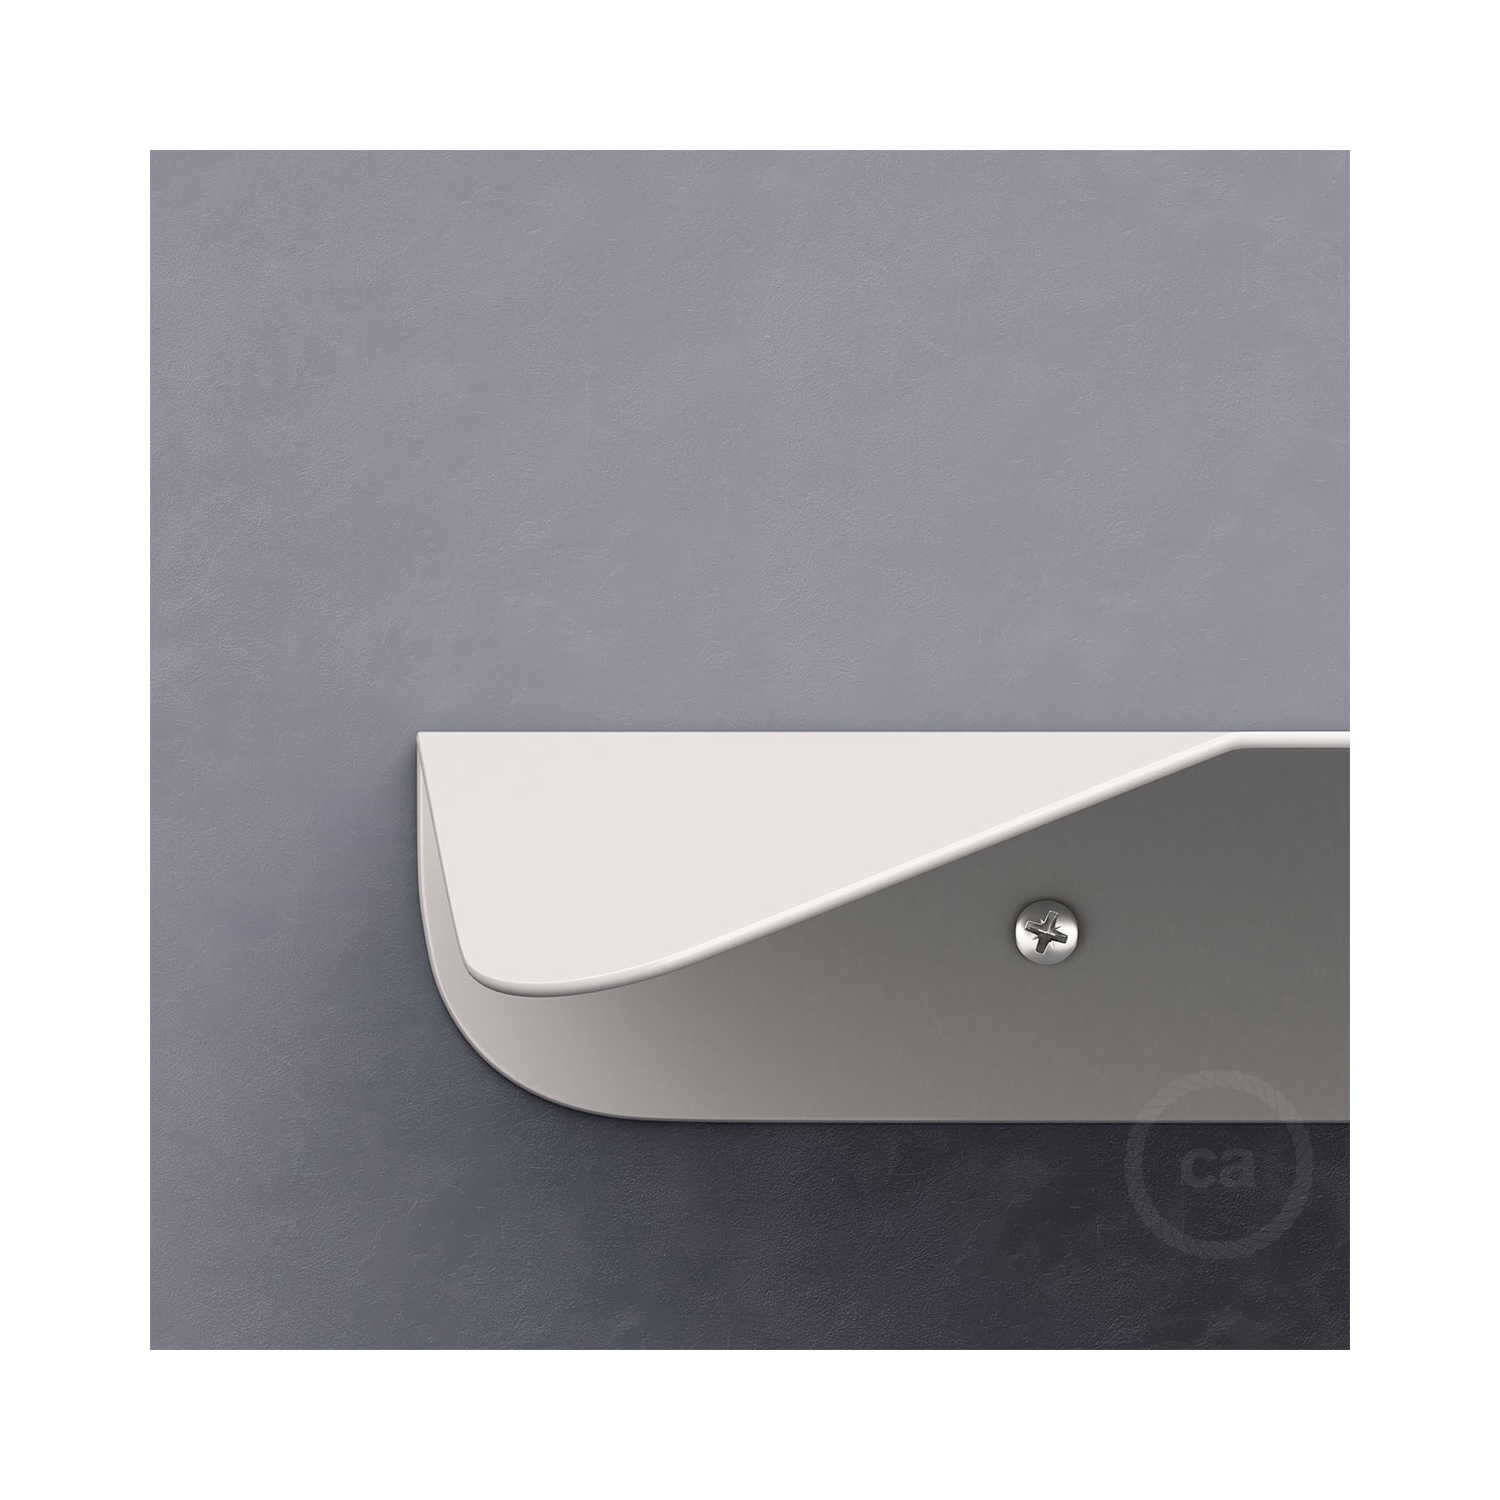 Magnetico®-Shelf White, metal shelf for Magnetico®-Plug